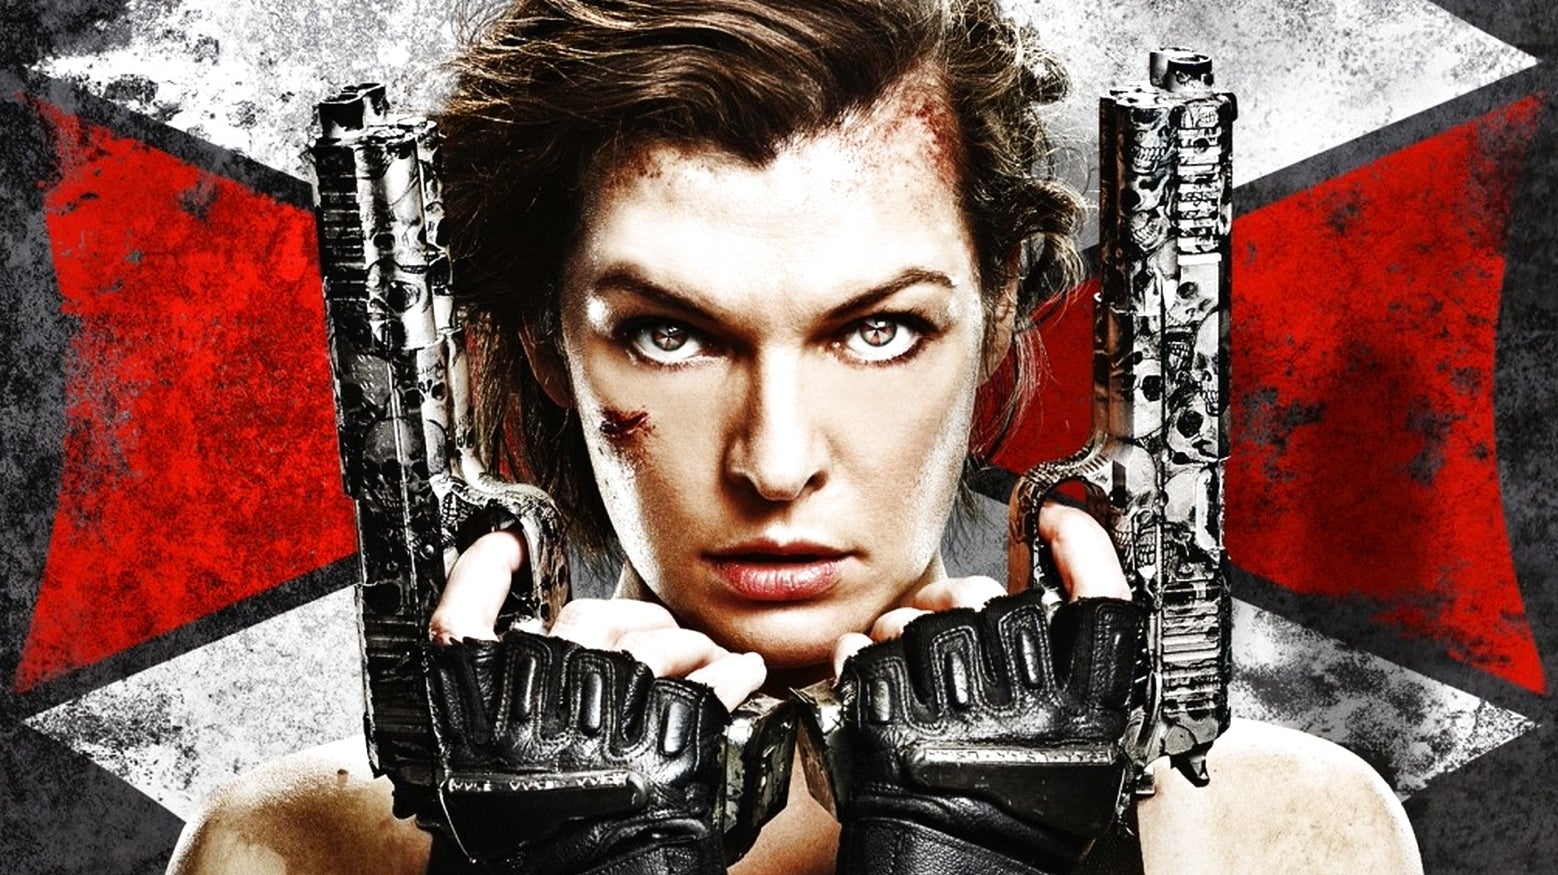 Bilder zu Resident Evil: Netflix bestätigt Live-Action-Serie